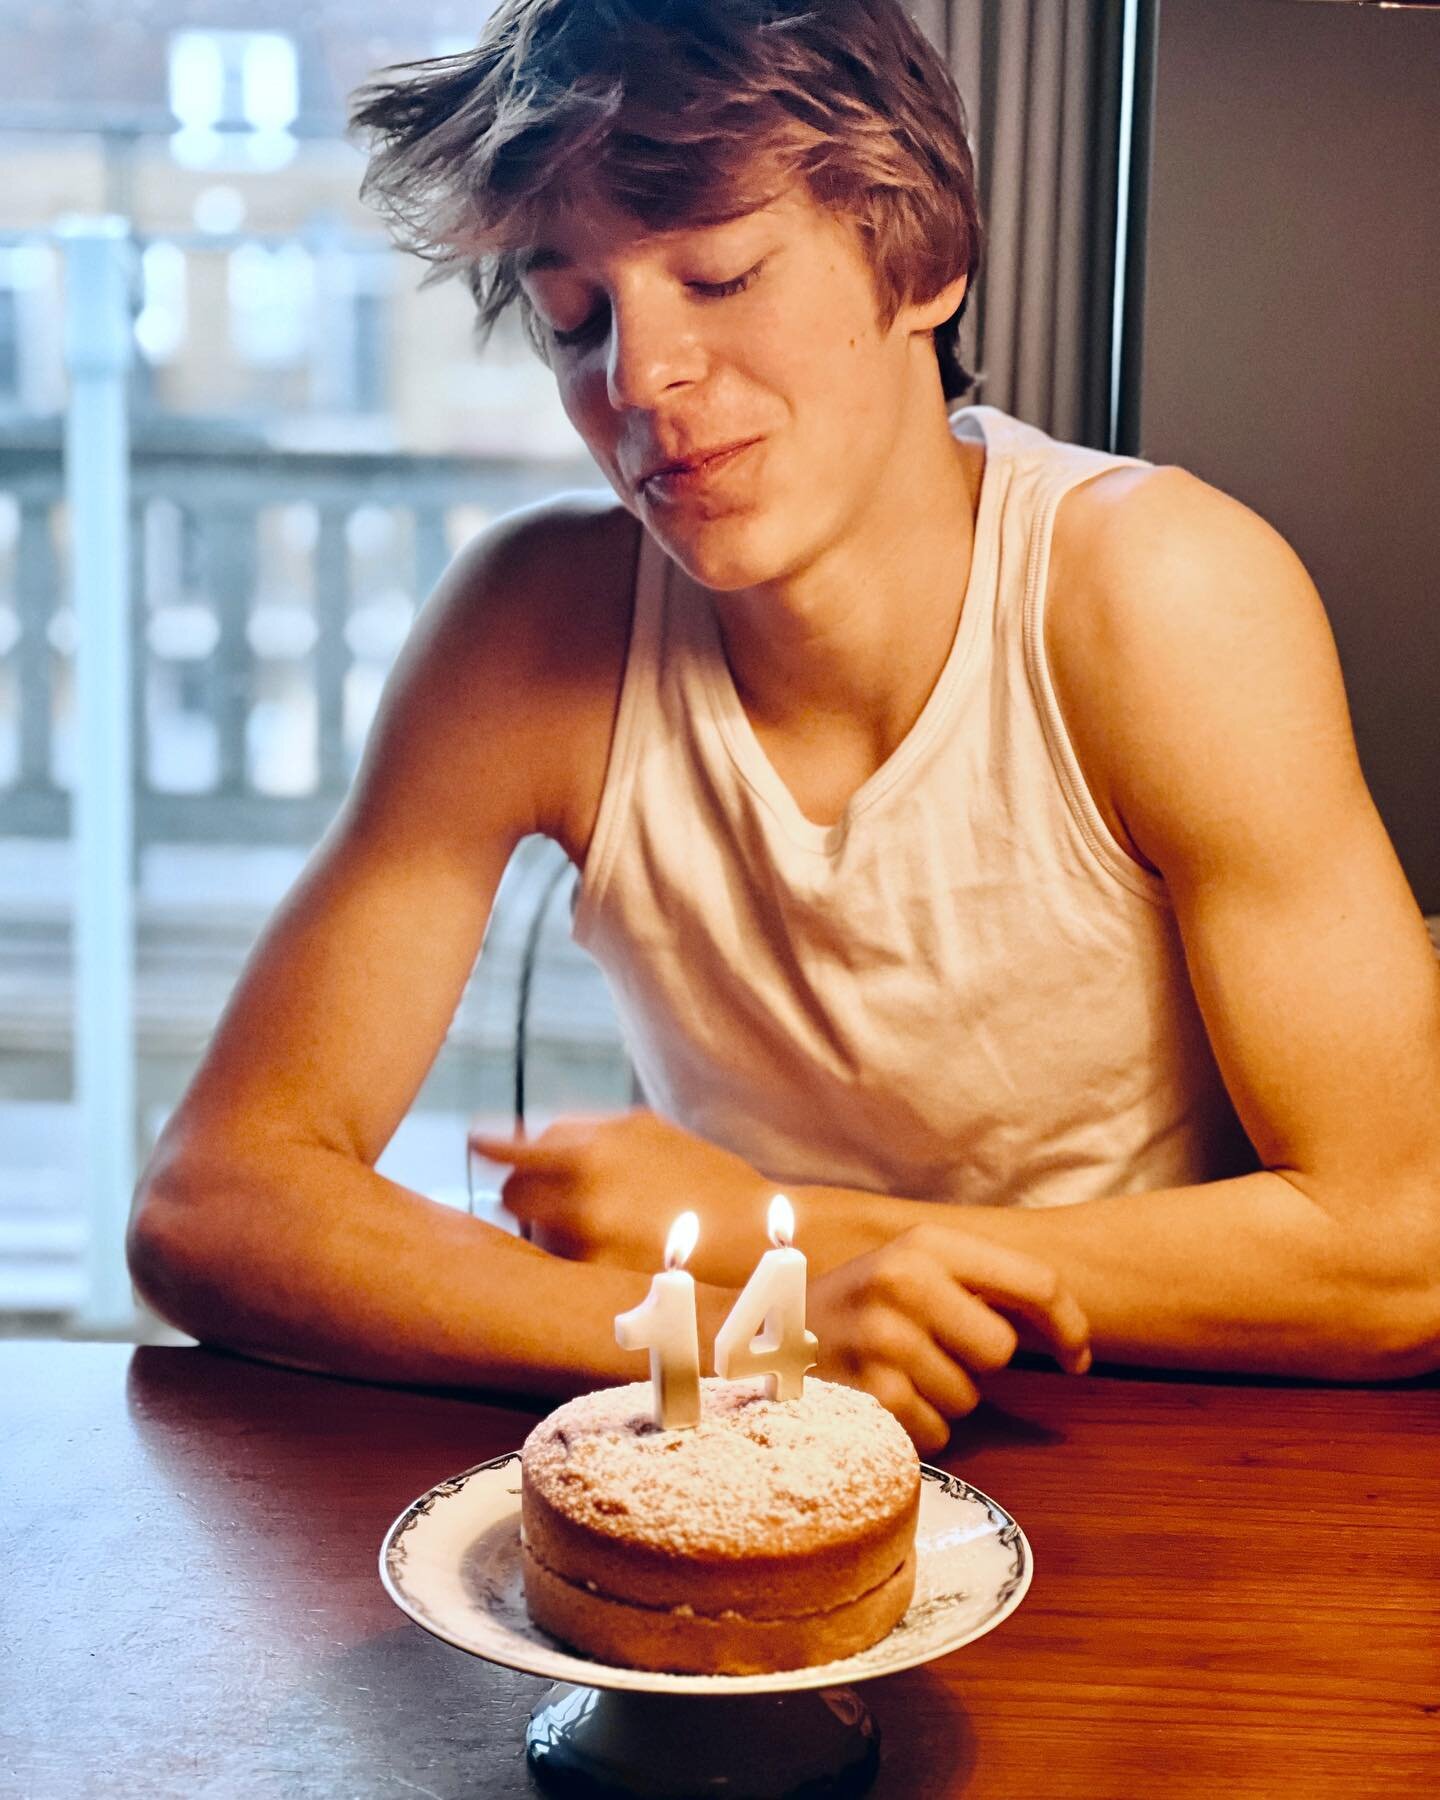 14! 
.
.
.
.
.
.
.
.
.
.
#birthday #happybirthday #jacknielen #actor #party #teen #teenager #birthdaycake #london